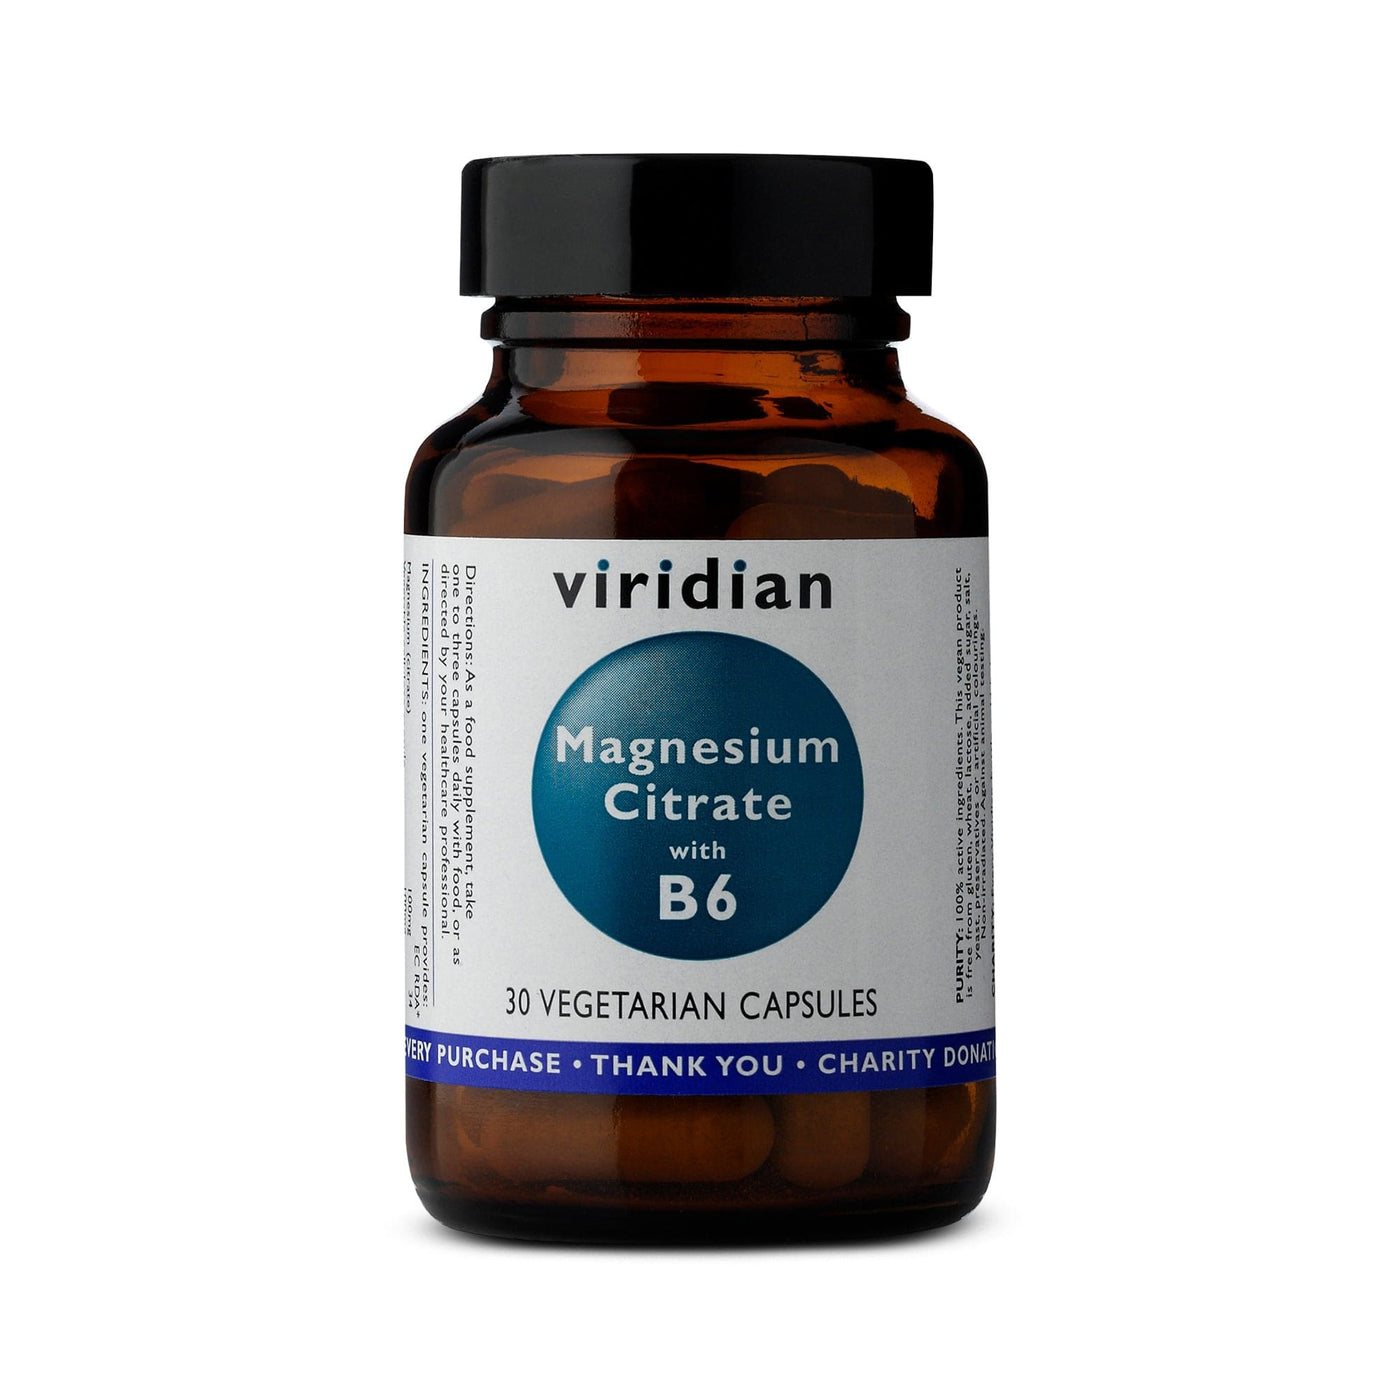 Neal's Yard Remedies Viridian Magnesium Citrate with B6 Veg Caps - 30 Capsules